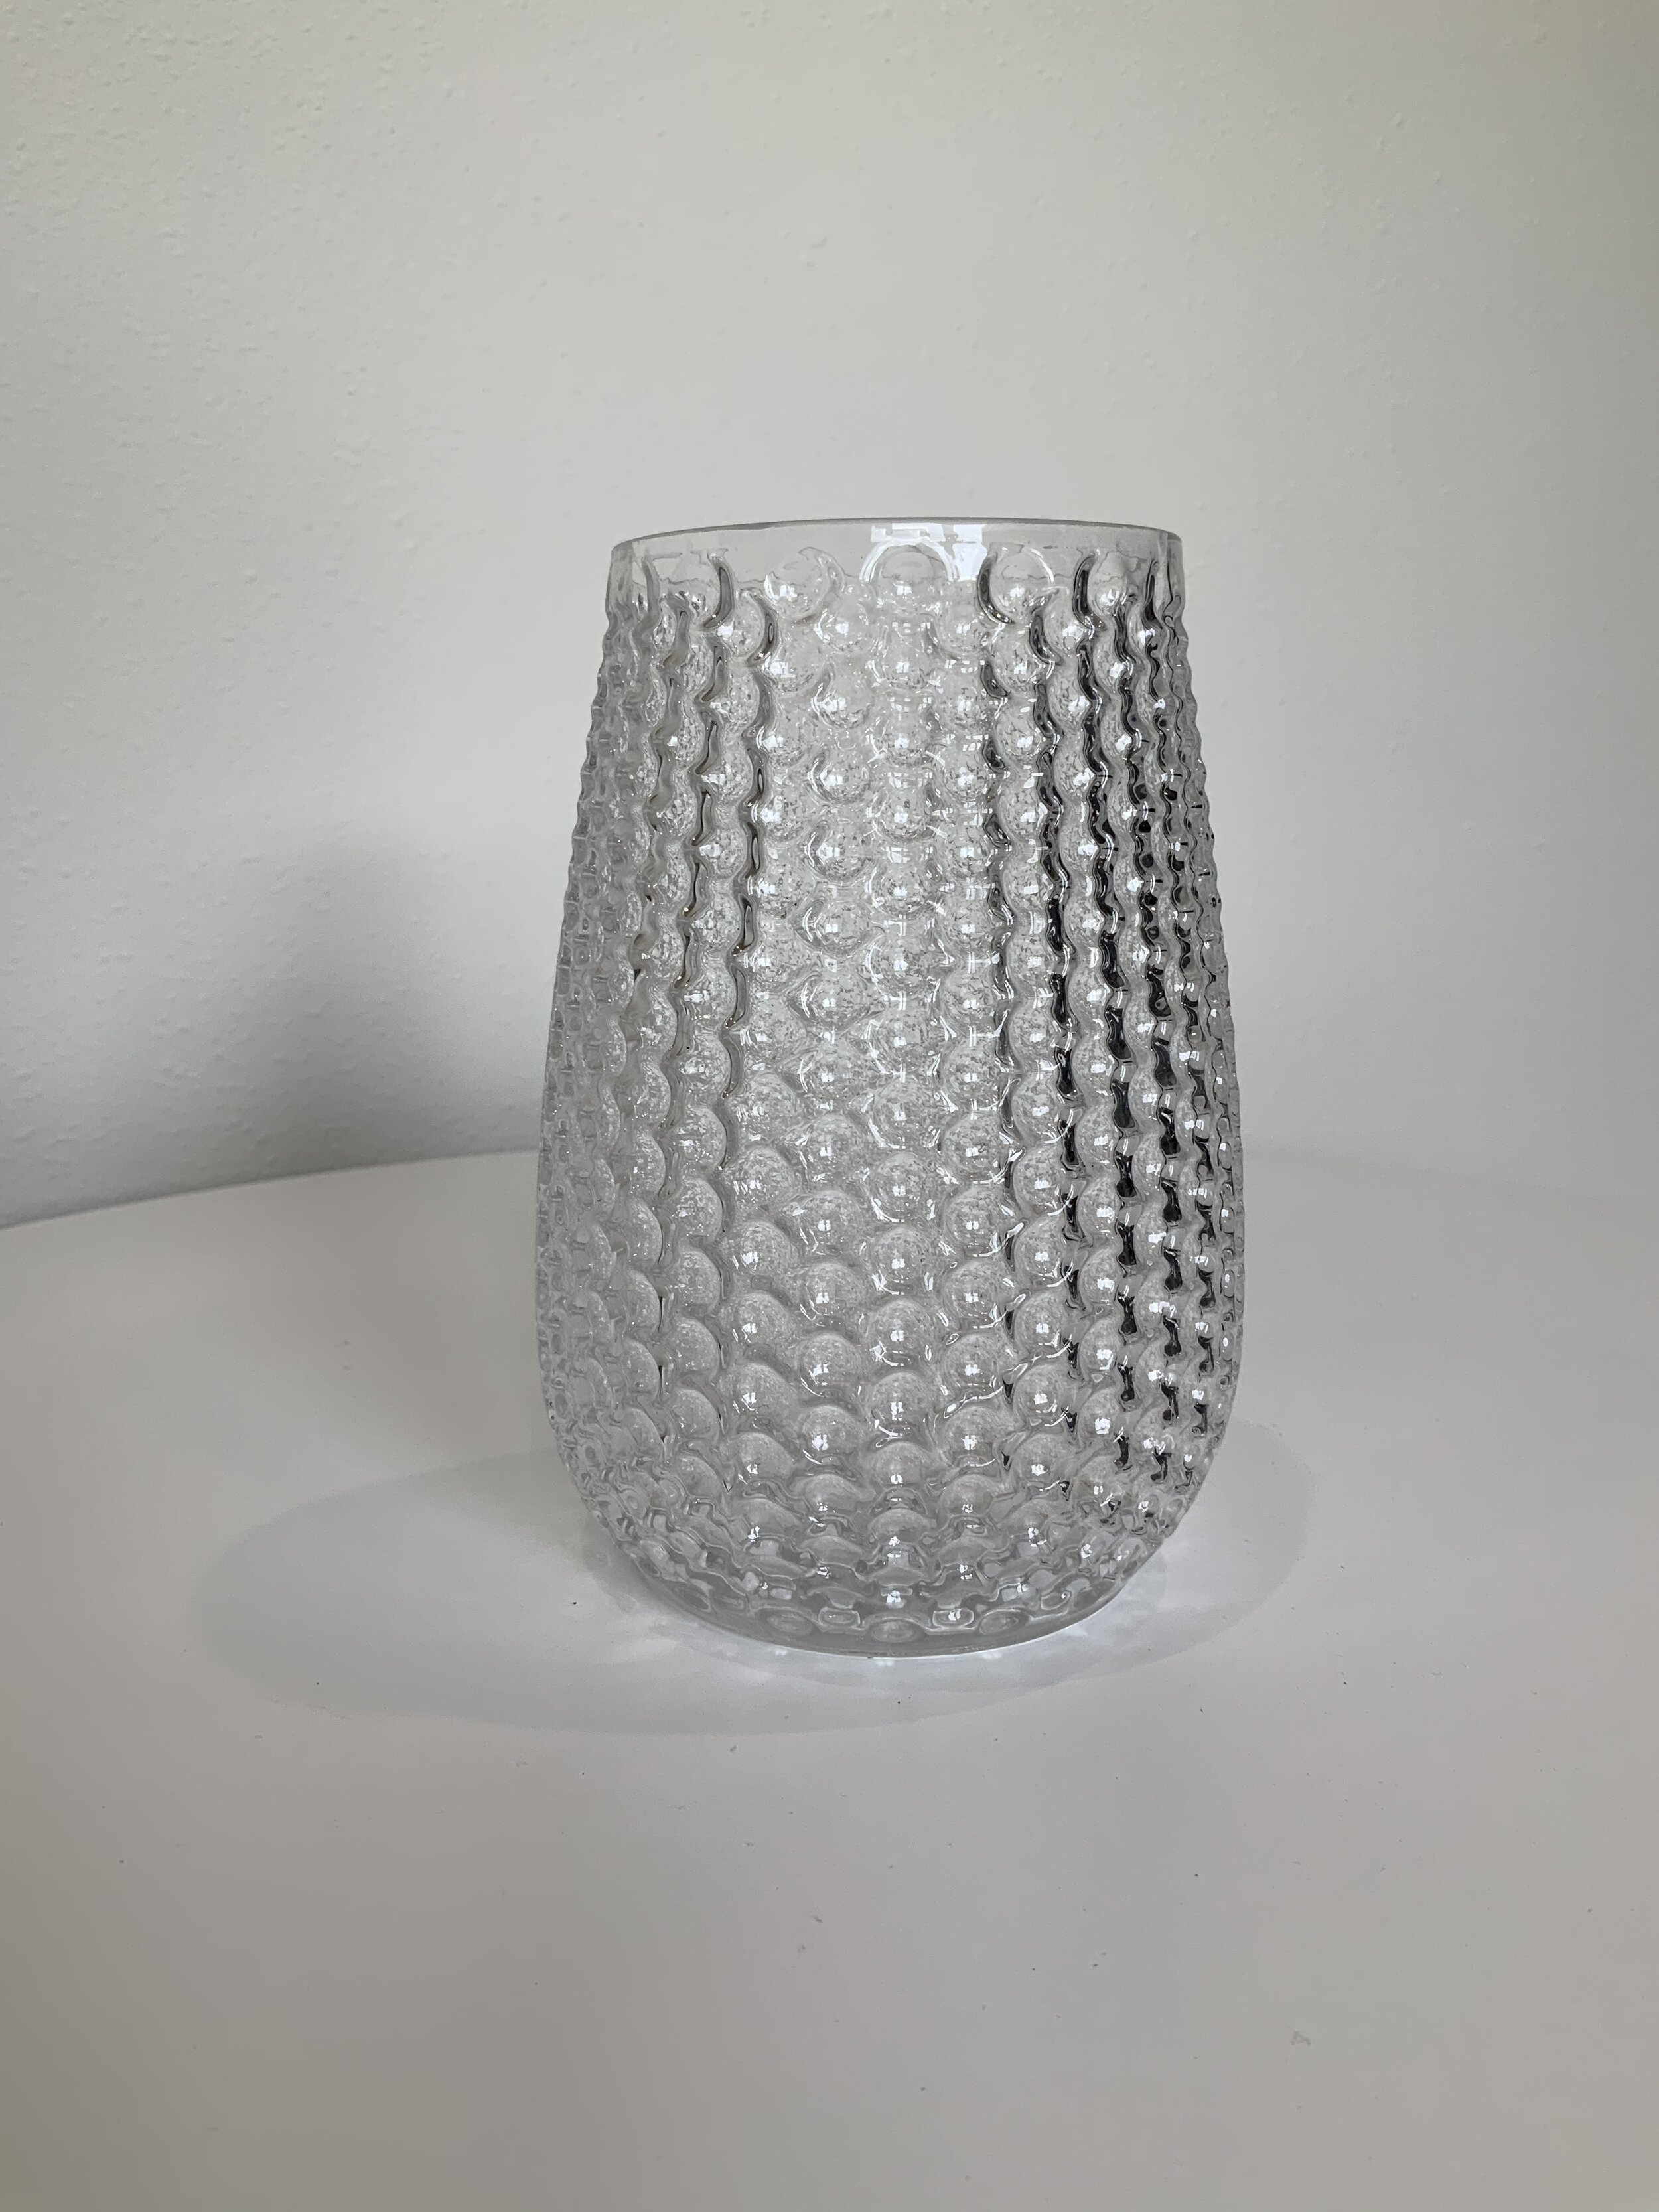 Pebble stone vase/candle holder 6" tall, 3"opening (37 pc) - $4